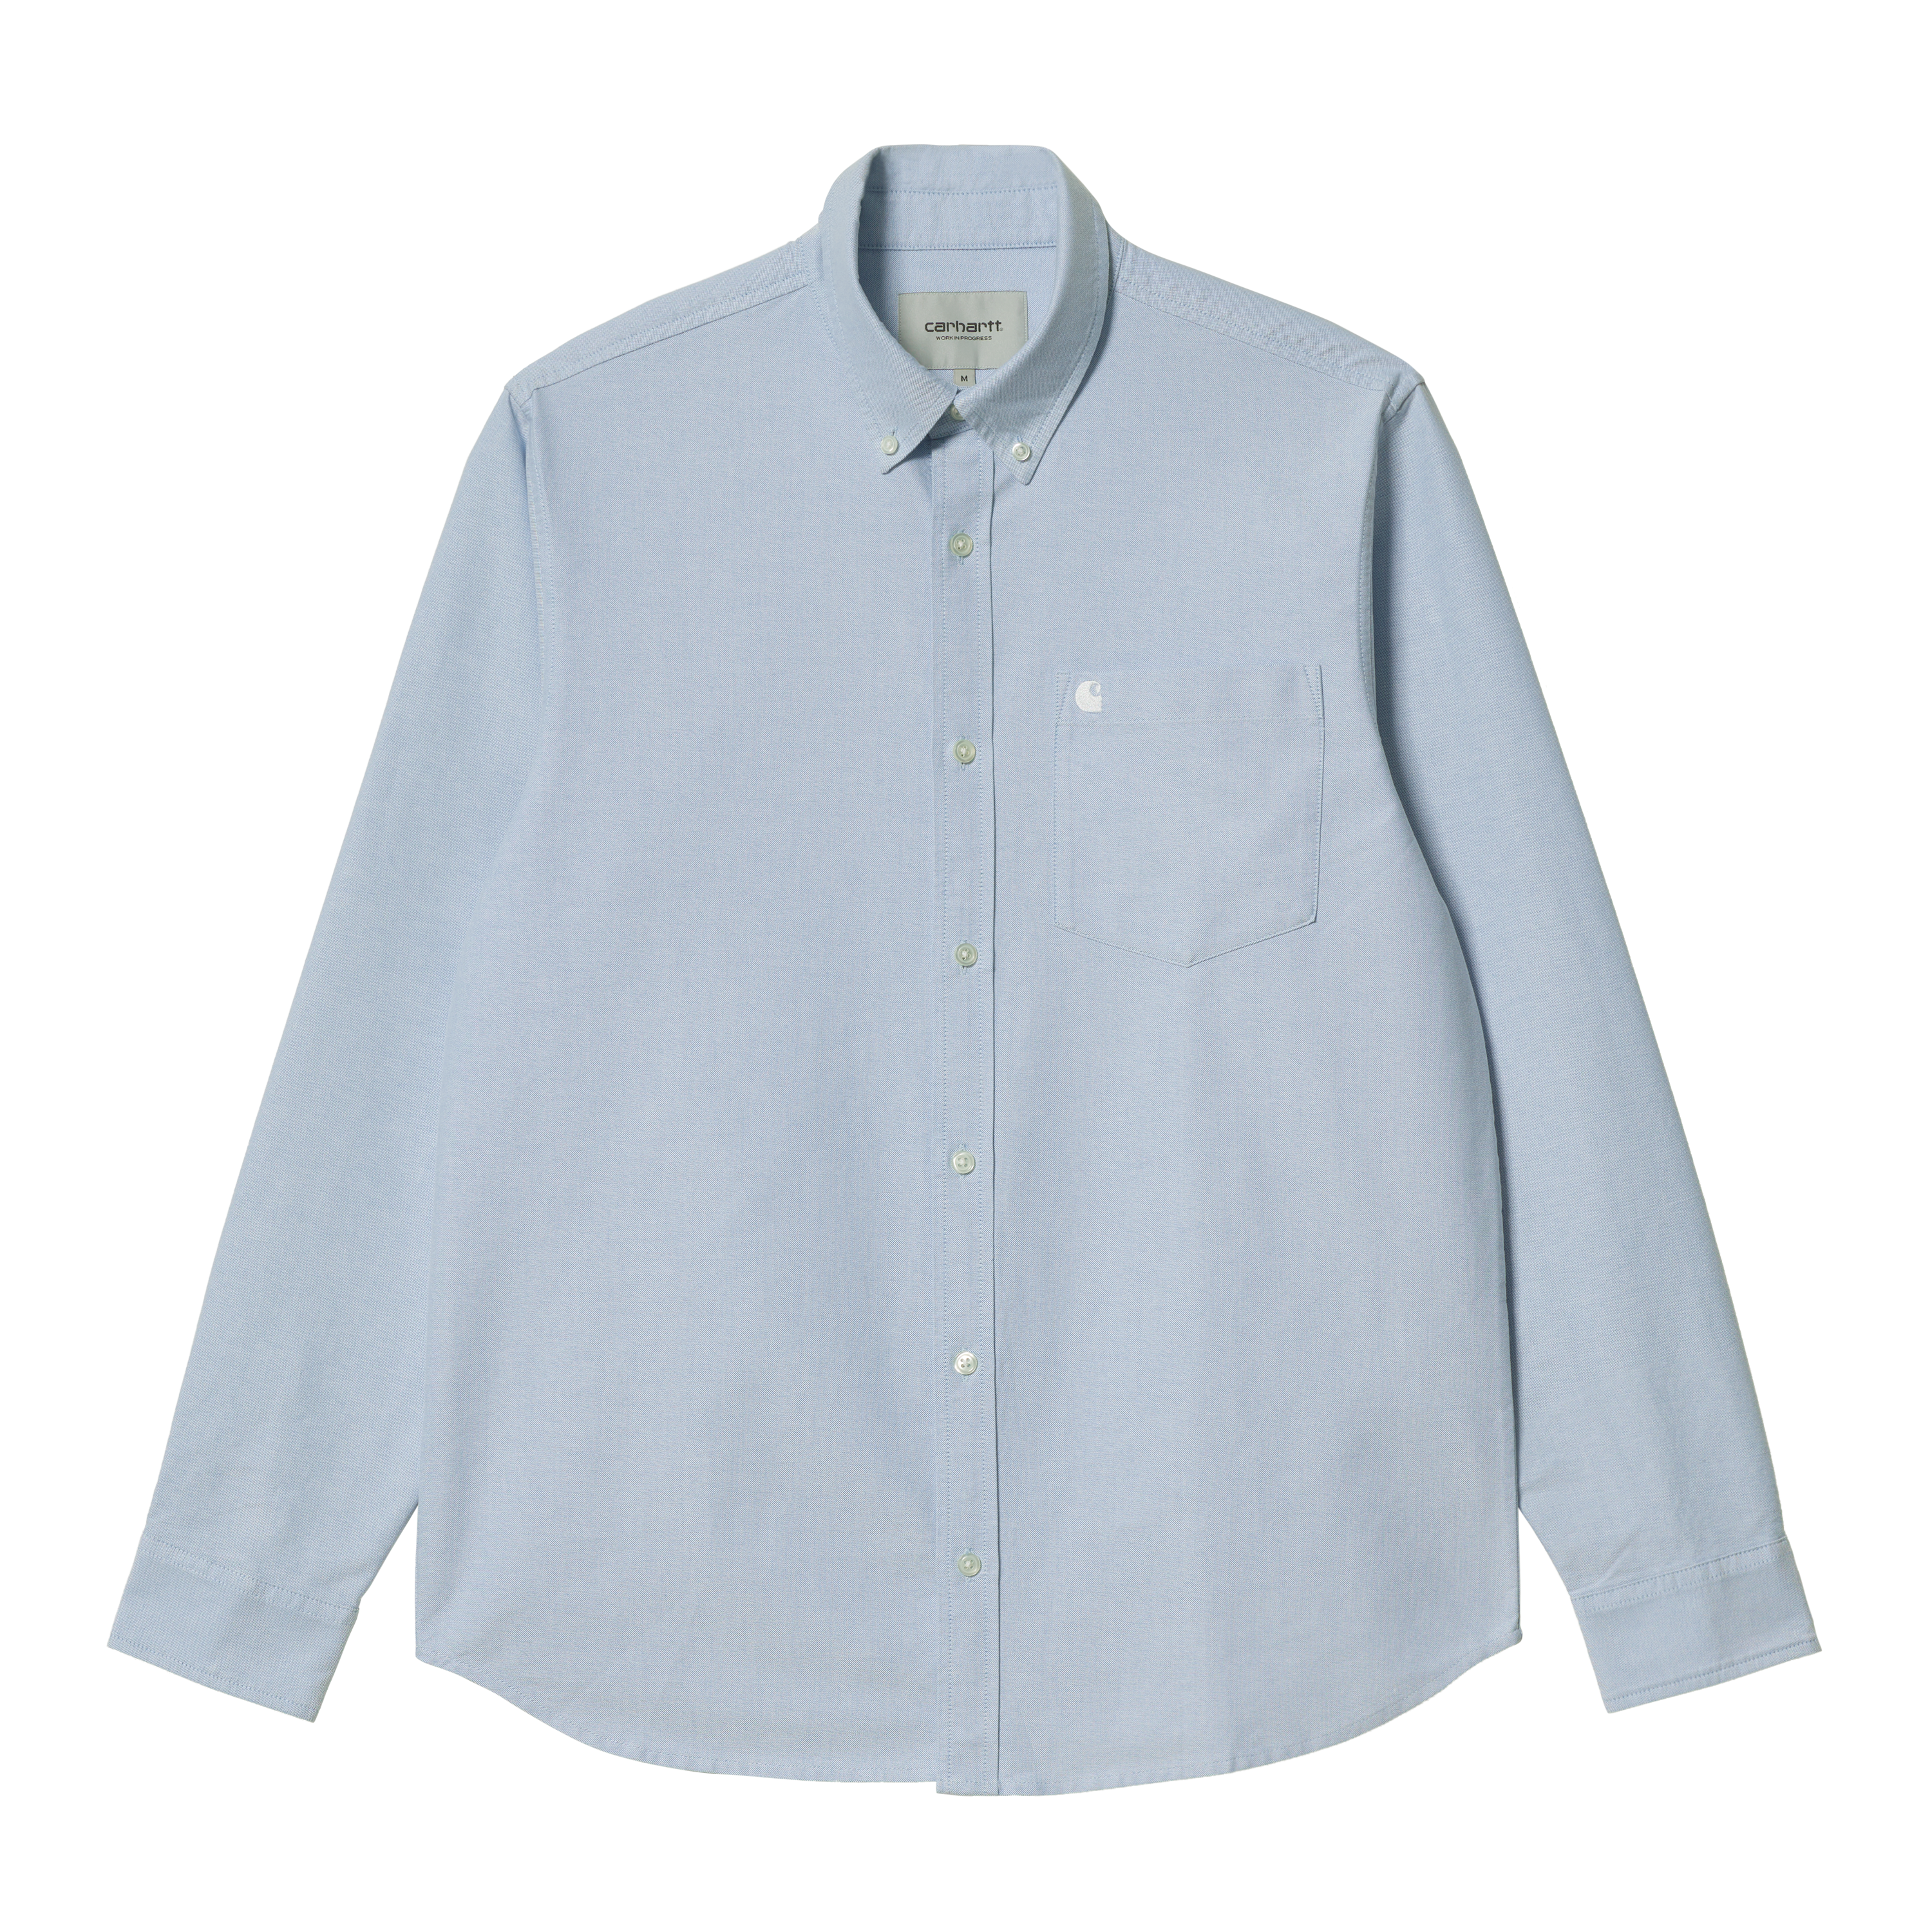 Carhartt WIP Long Sleeve C-Logo Shirt in